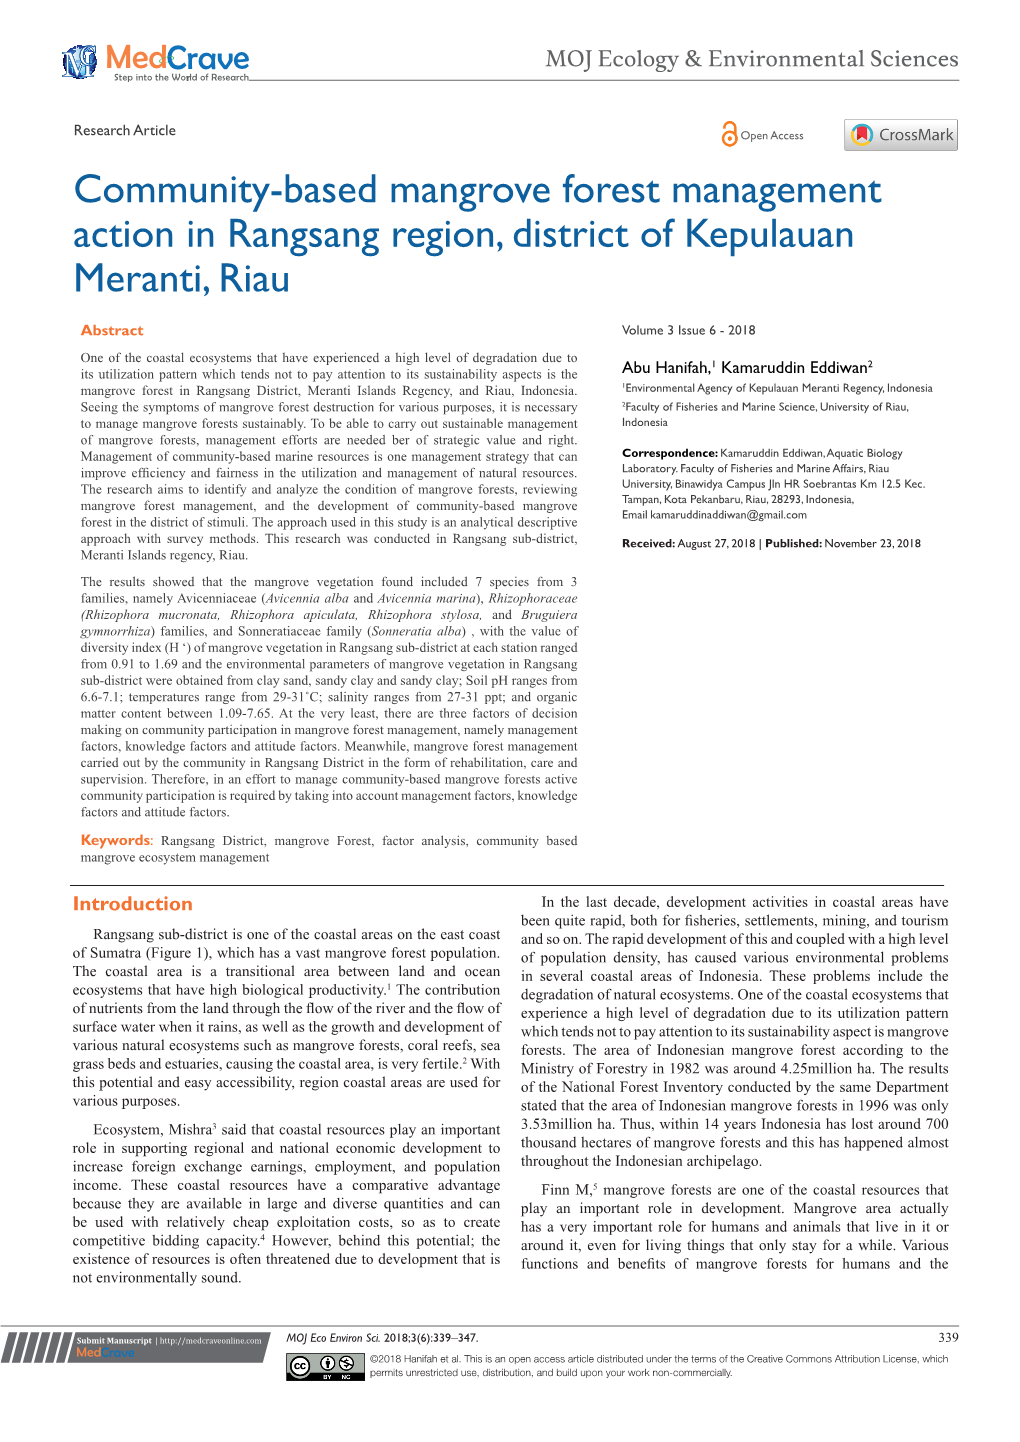 Community-Based Mangrove Forest Management Action in Rangsang Region, District of Kepulauan Meranti, Riau